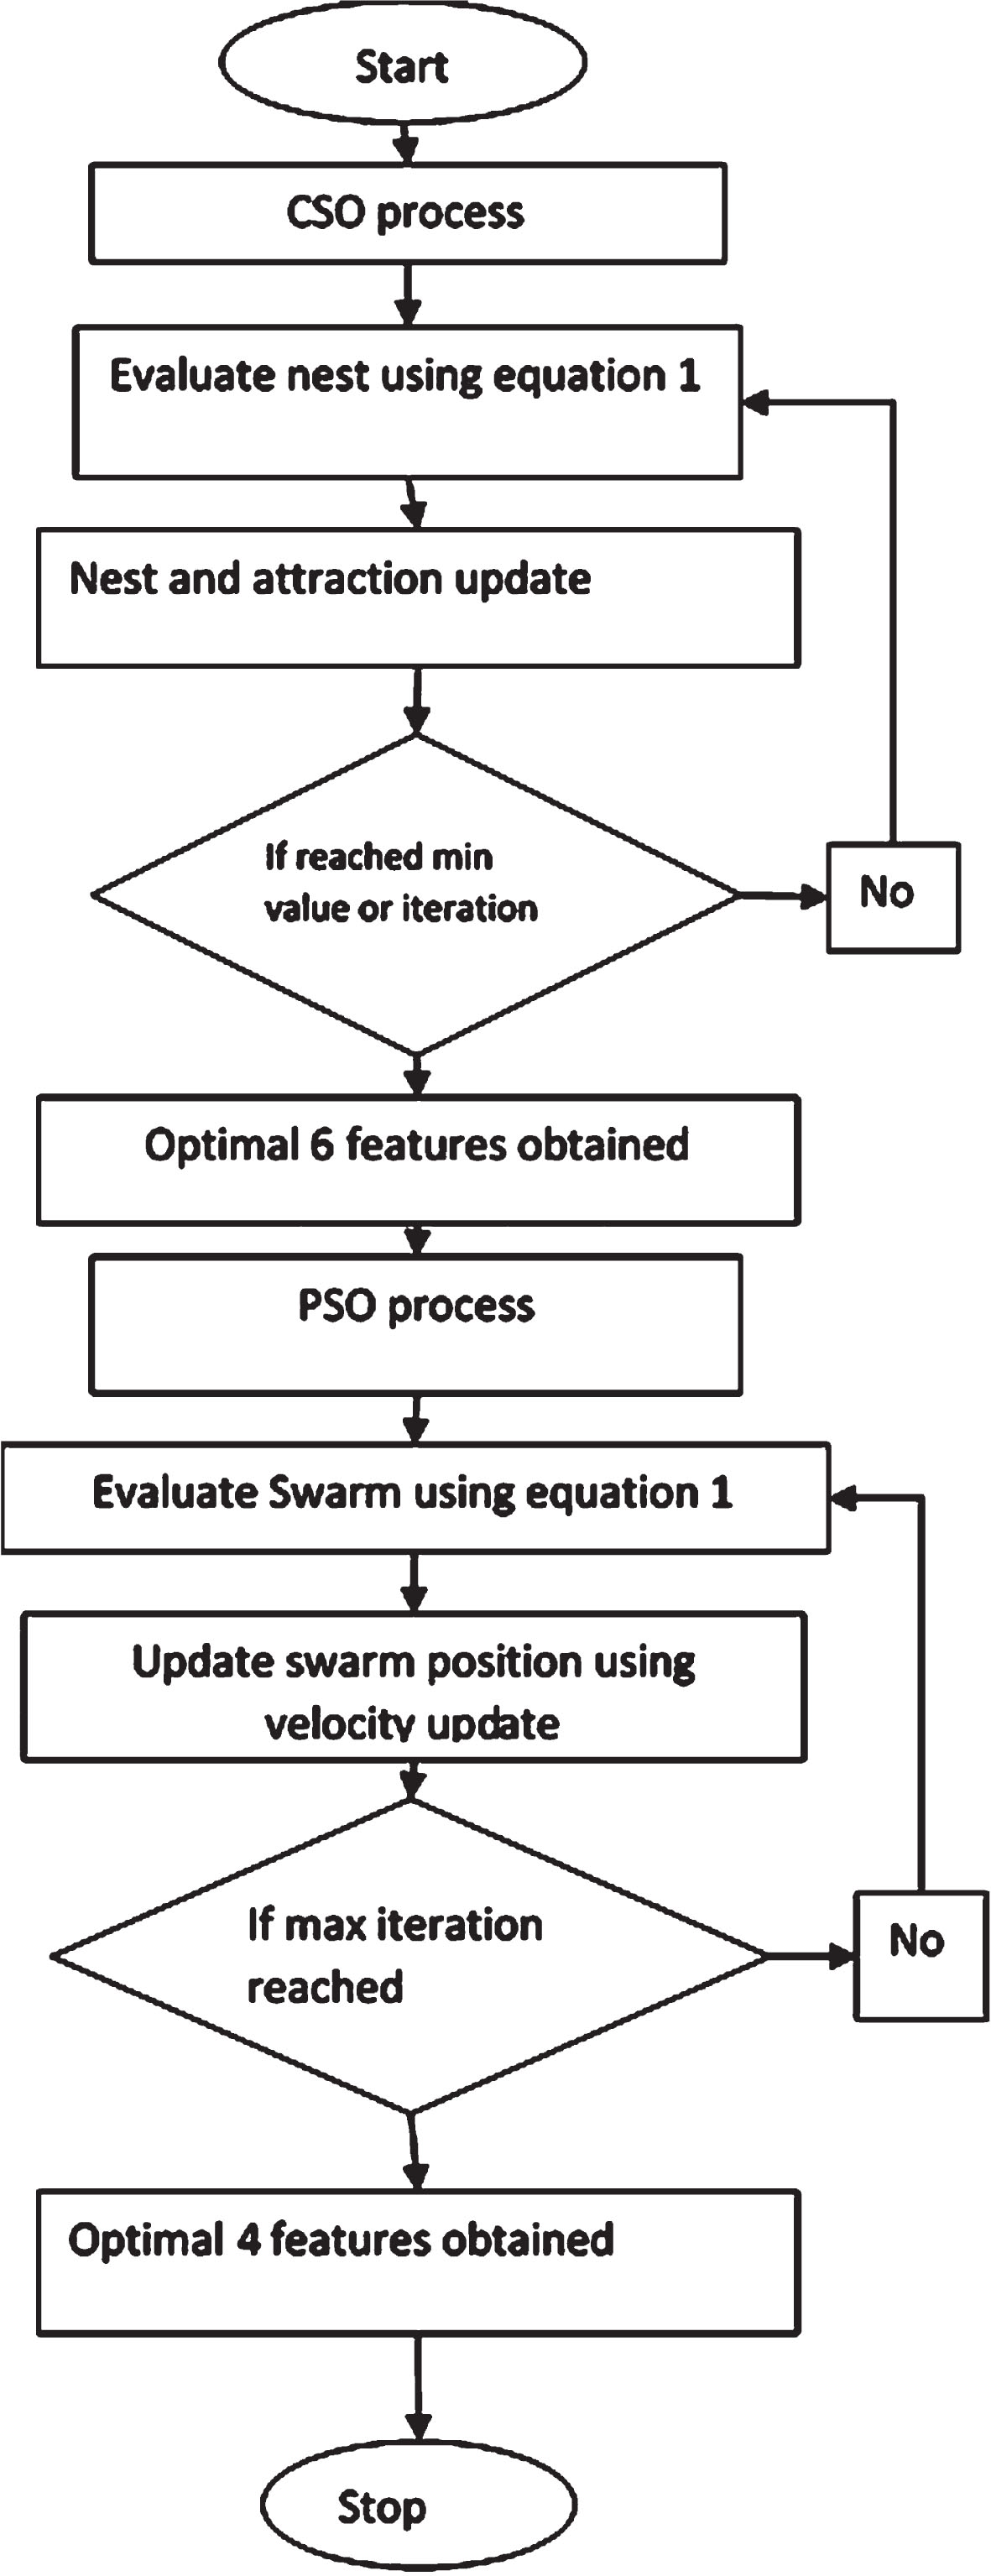 HCSO-PSO processes.